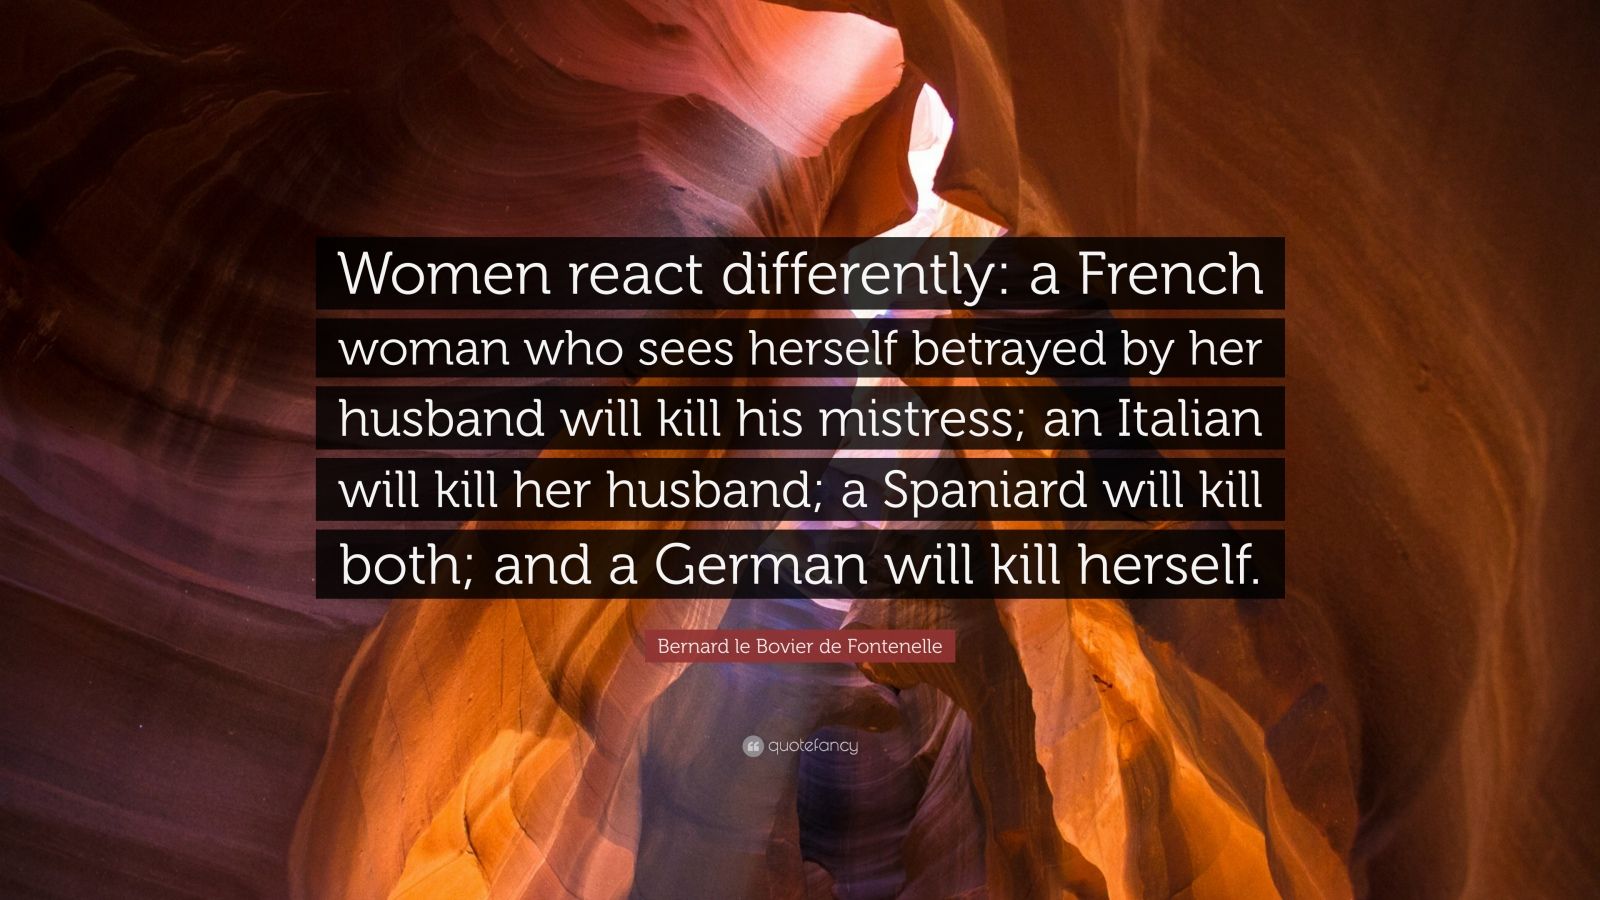 Bernard le Bovier de Fontenelle Quote: “Women react differently: a